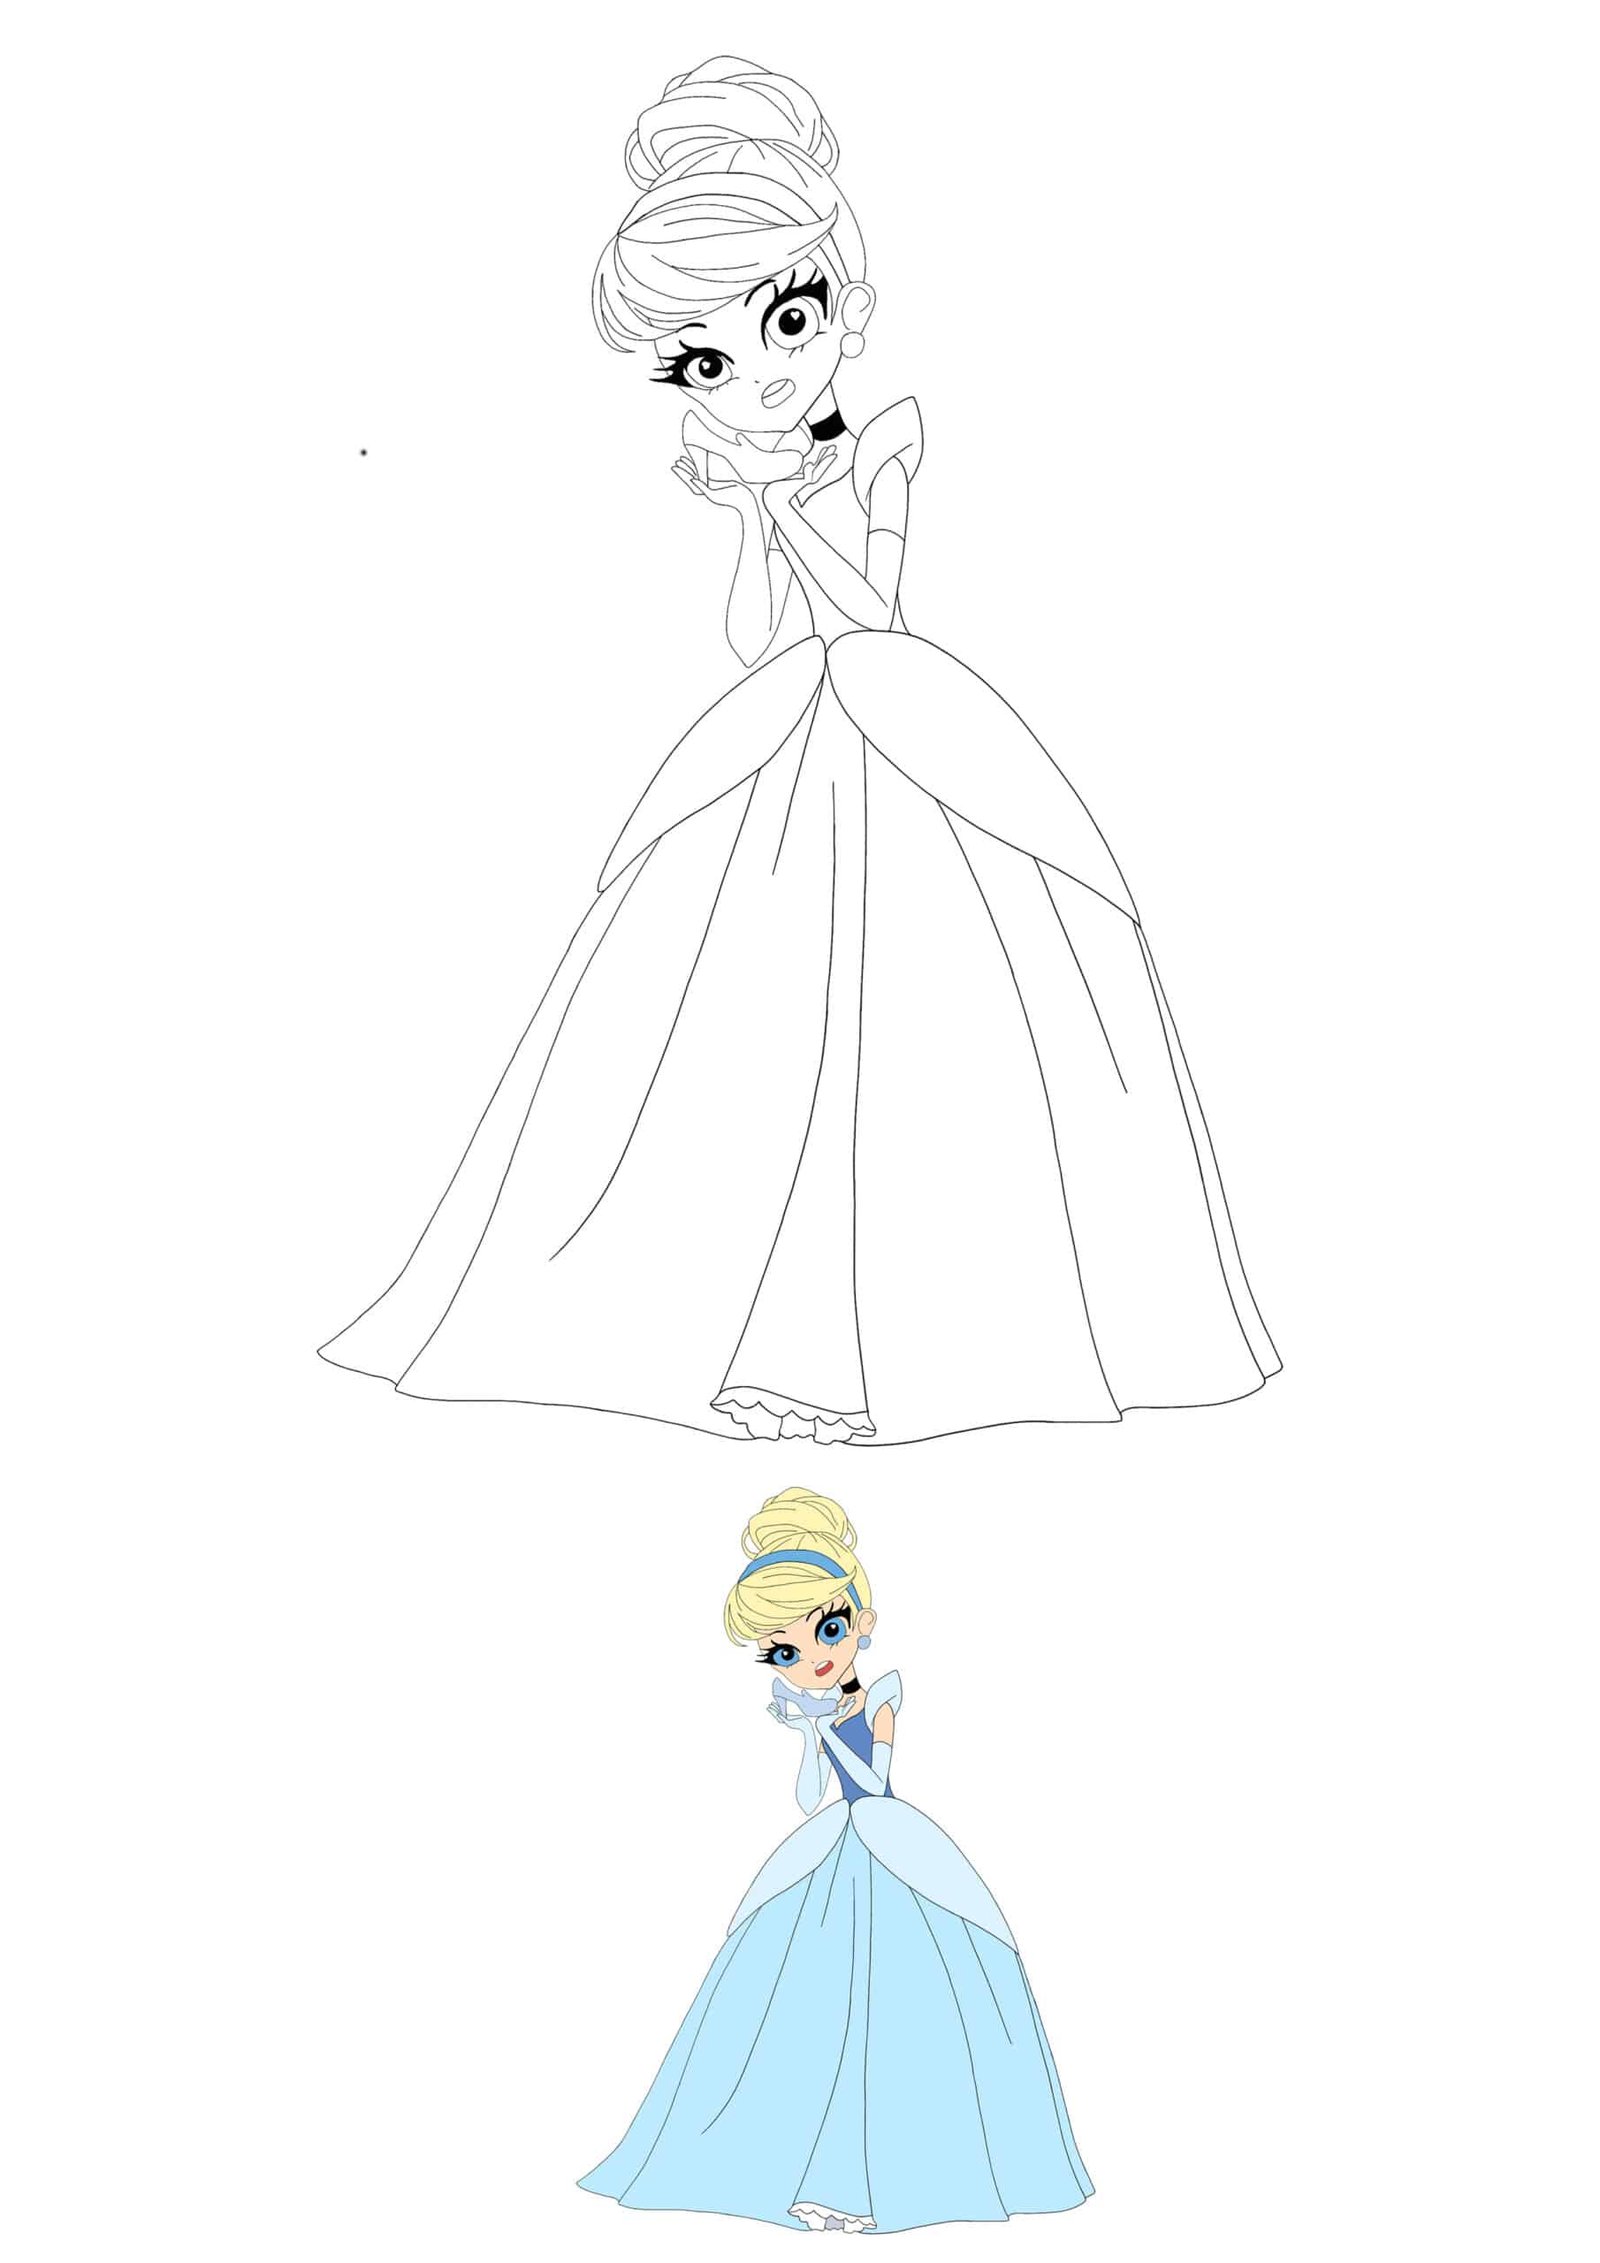 Anime Disney Princess Cinderella colouring page